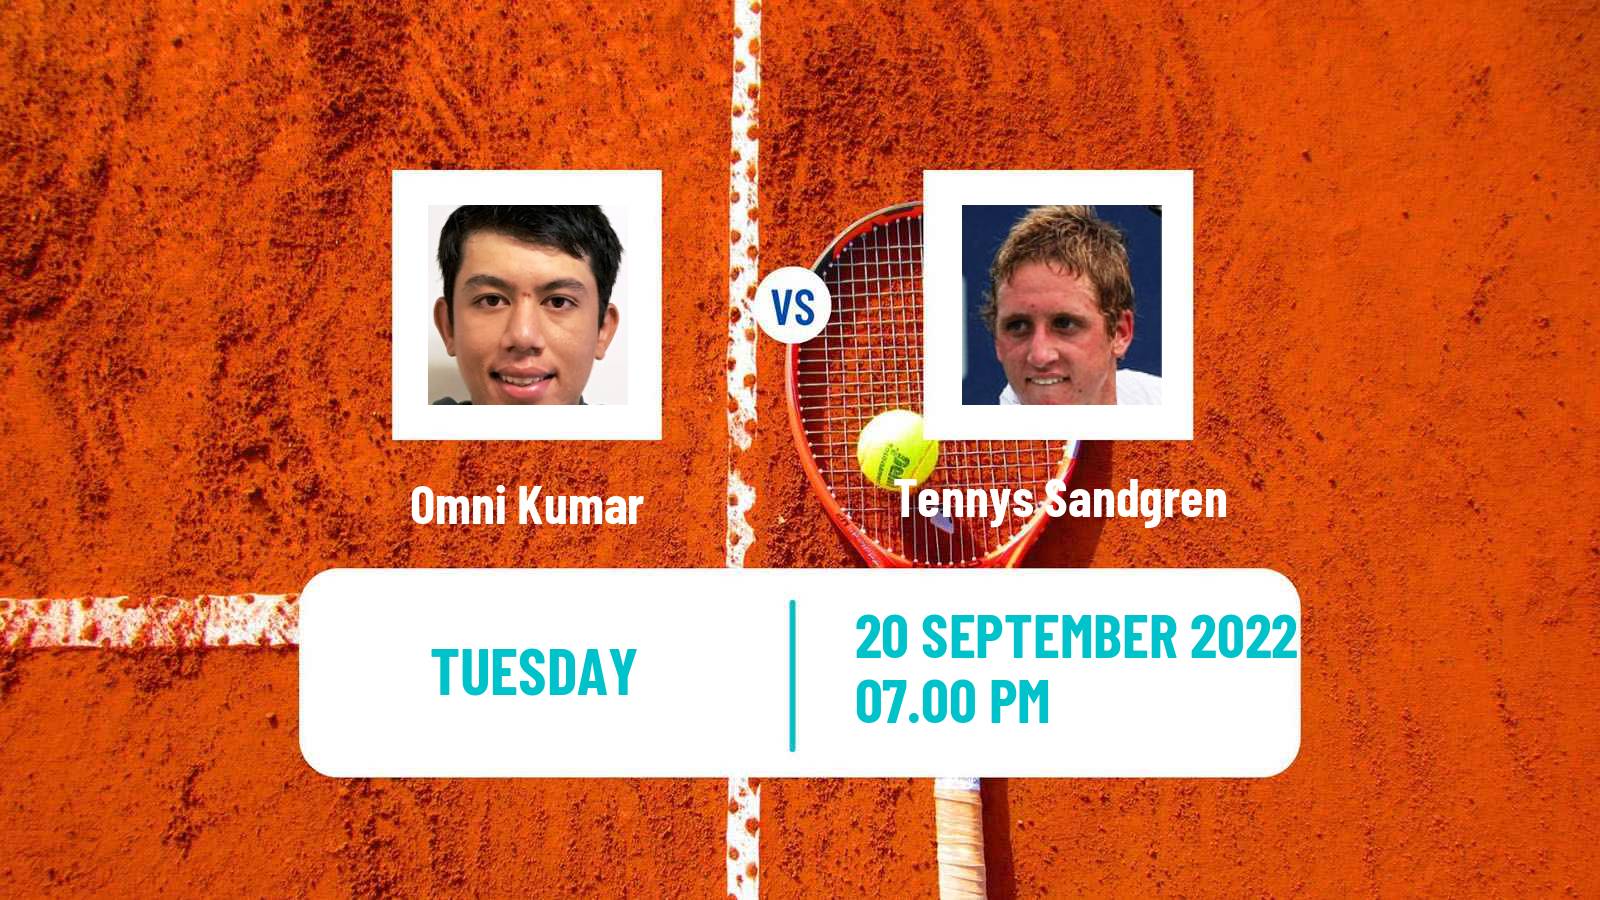 Tennis ATP Challenger Omni Kumar - Tennys Sandgren